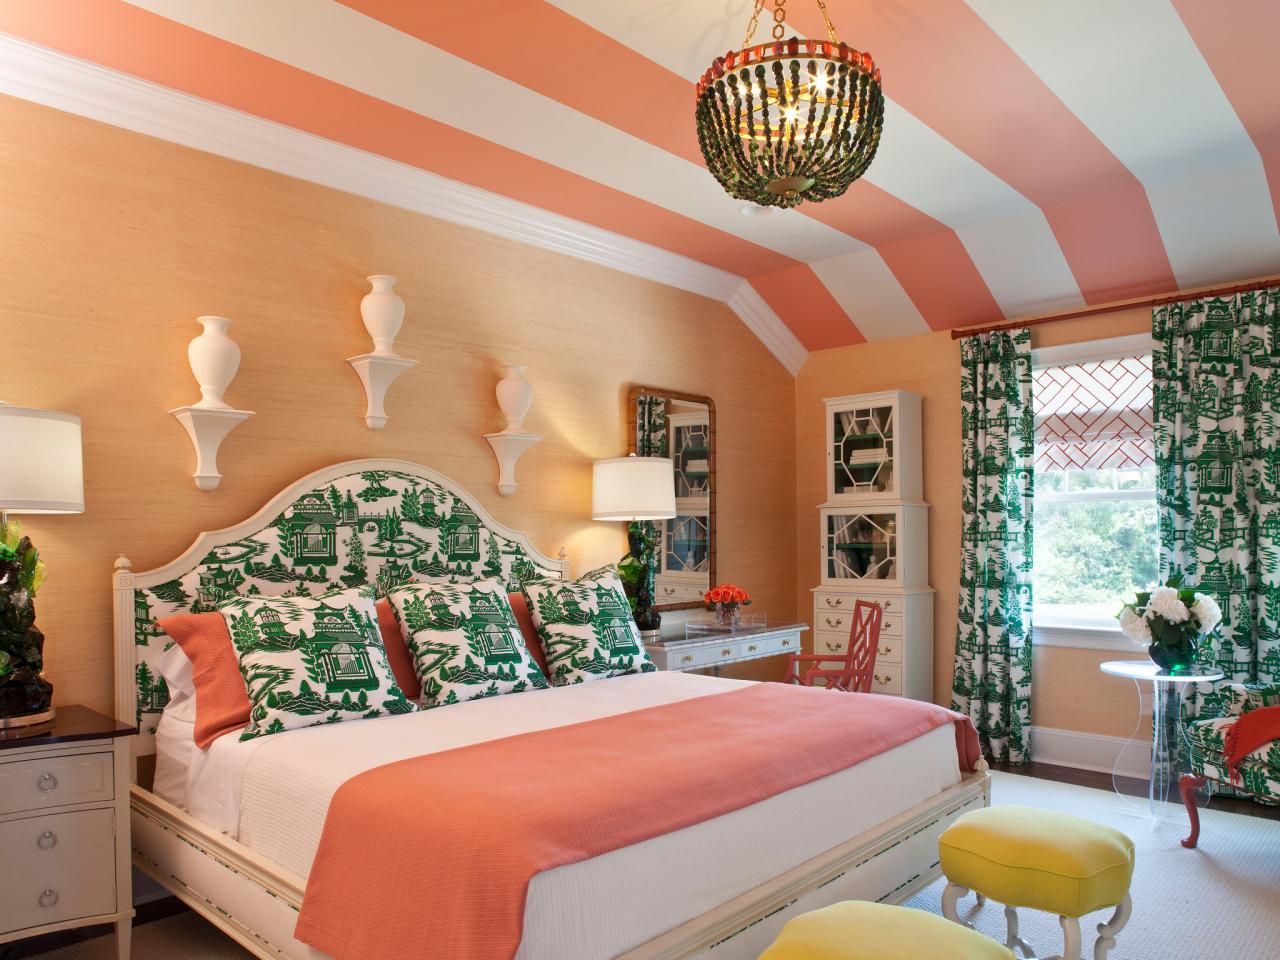 Bedroom Paint Color Ideas Pictures Options HGTV